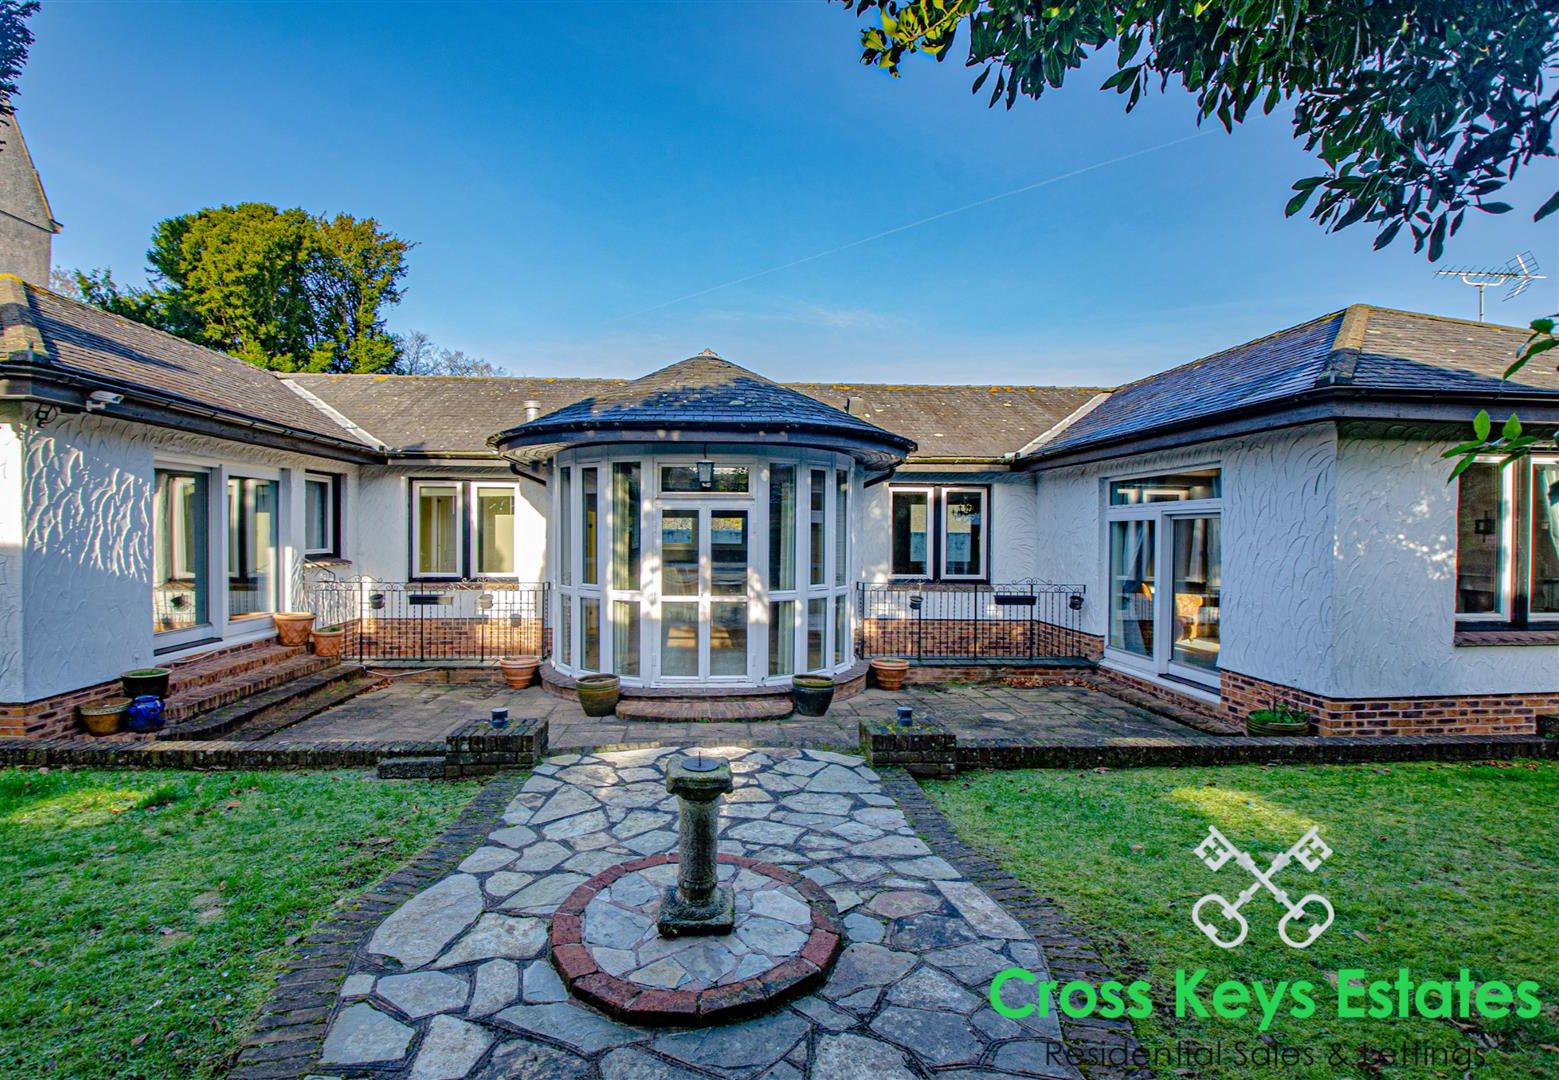 Cross Keys Estate Agents Sales Property of the Week 1